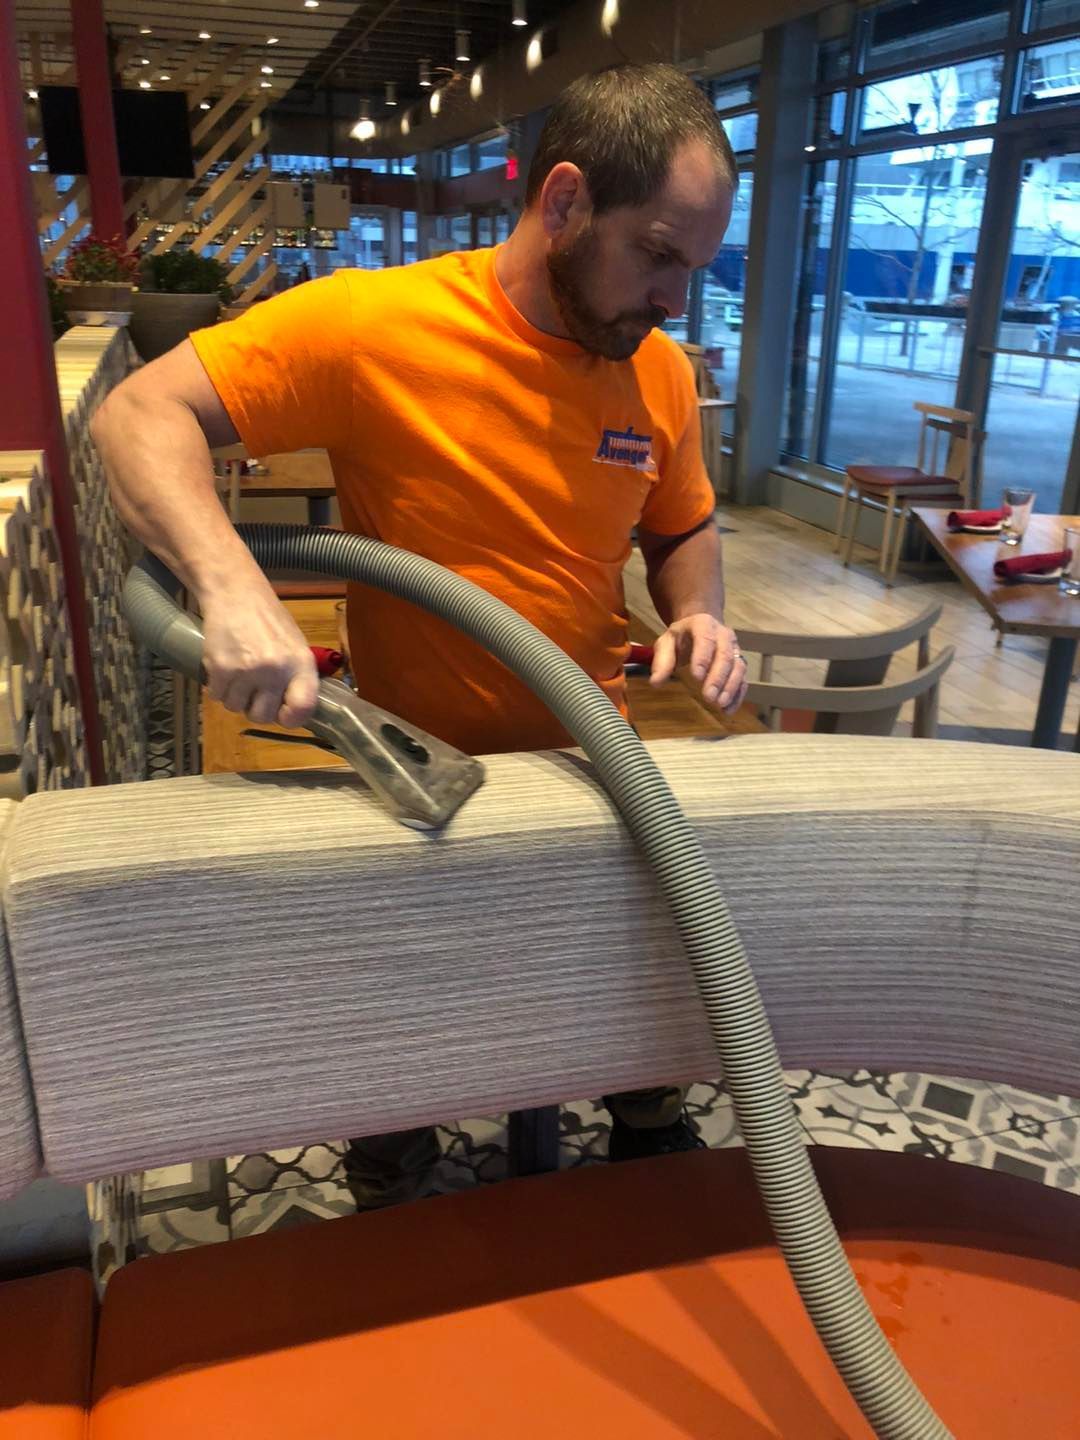 A man wearing an orange shirt cleaning a furniture